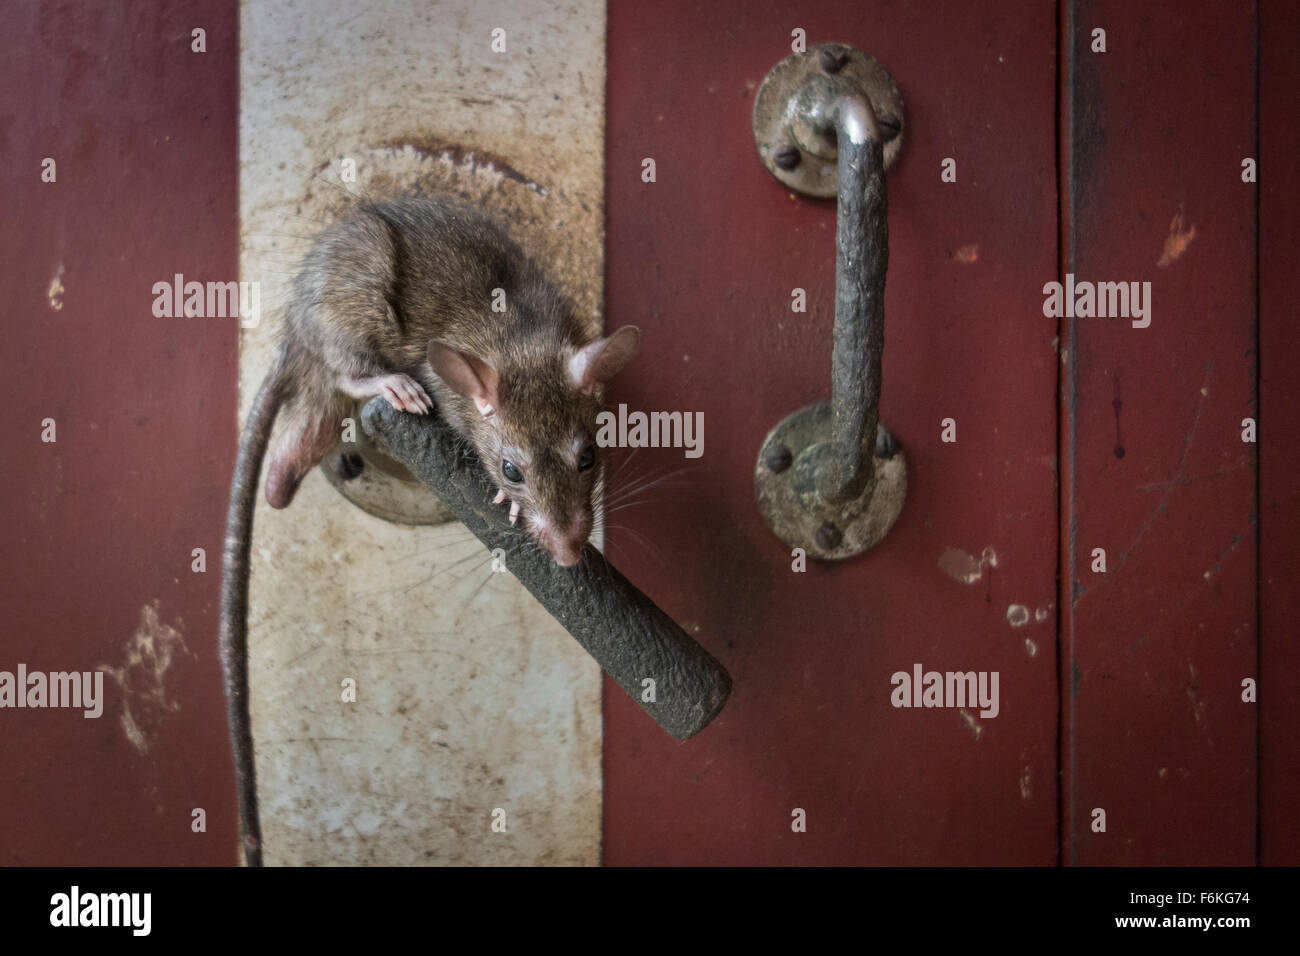 Many, many rats cover all surfaces at the Karni Mata Temple in Deshnok, India. Stock Photo